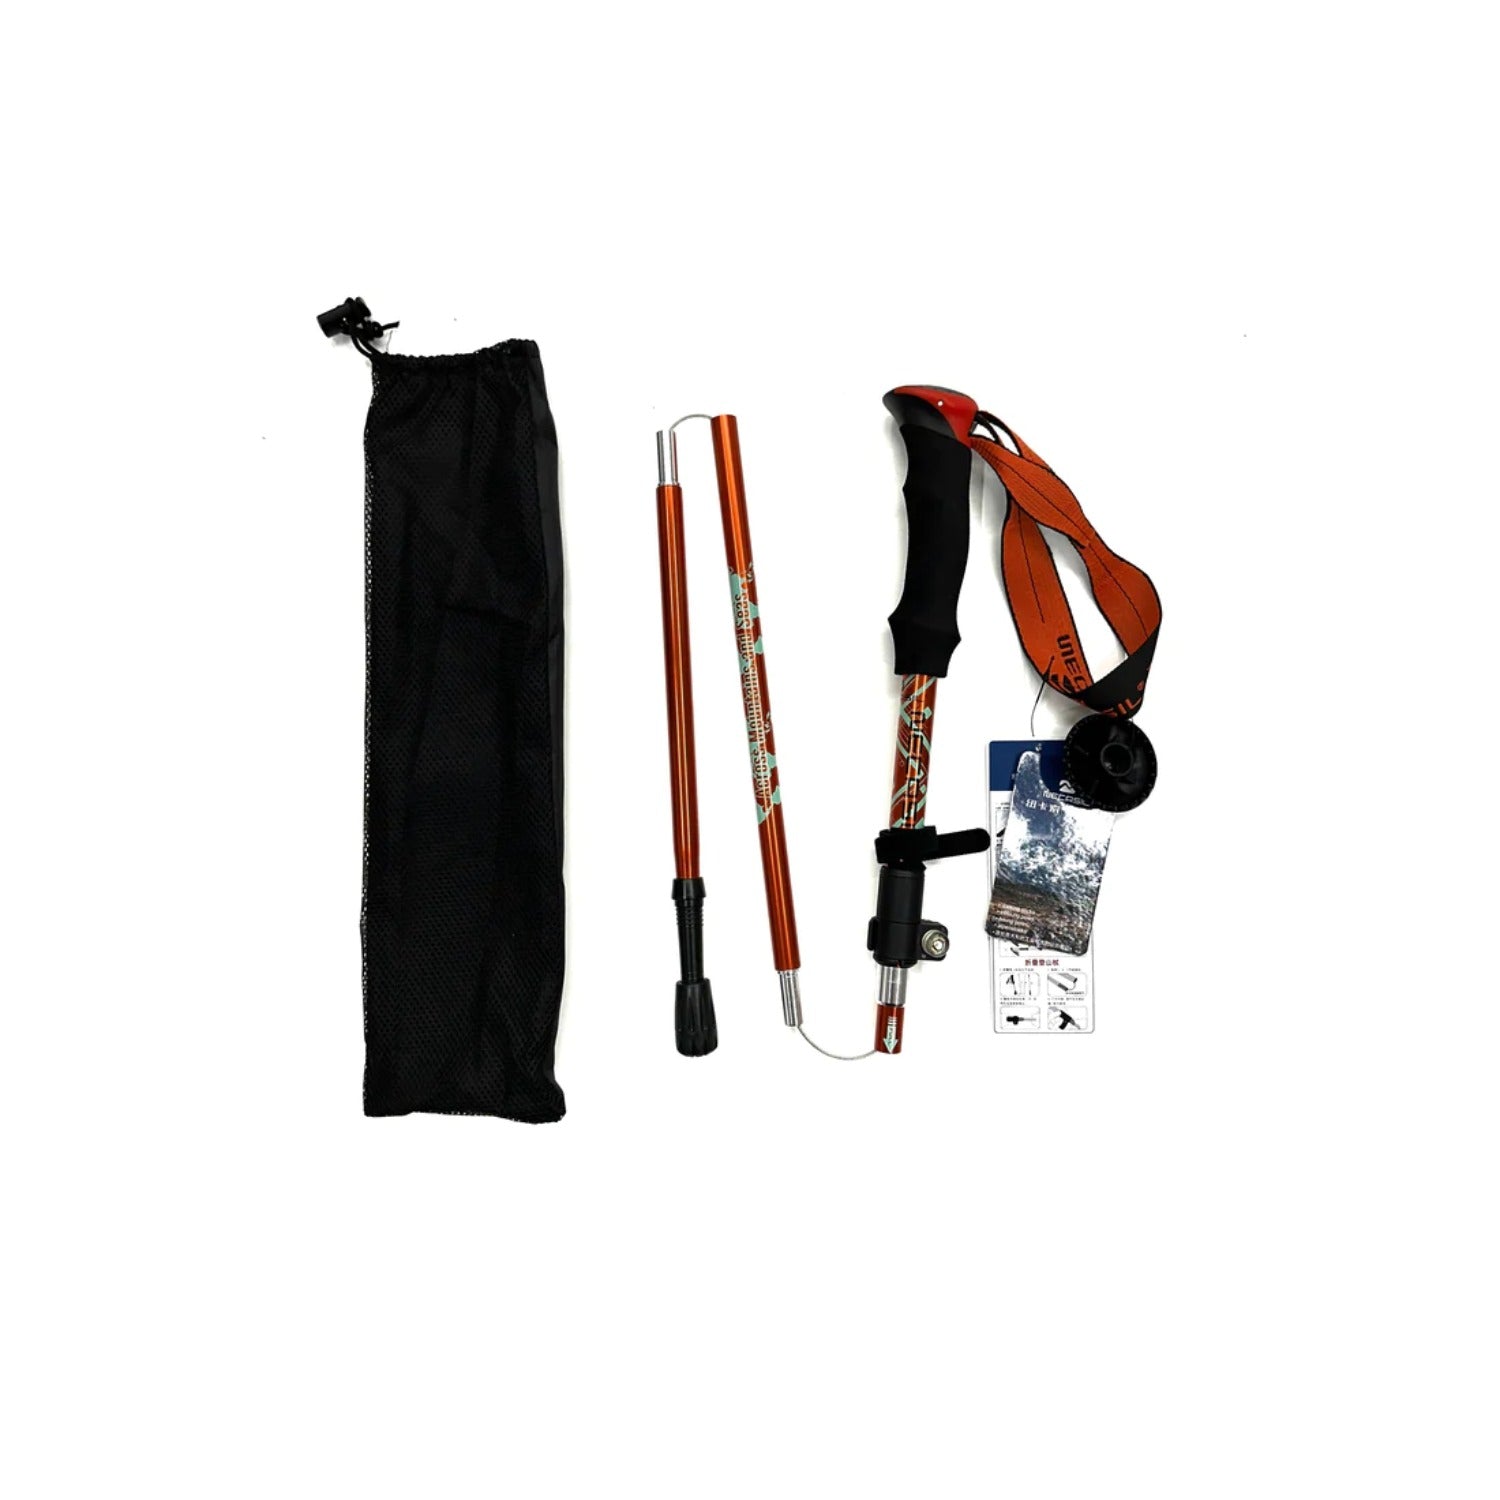 Buy Gokyo K2 Foldable Trekking Pole 33 Cms Orange | Trekking Pole at Gokyo Outdoor Clothing & Gear